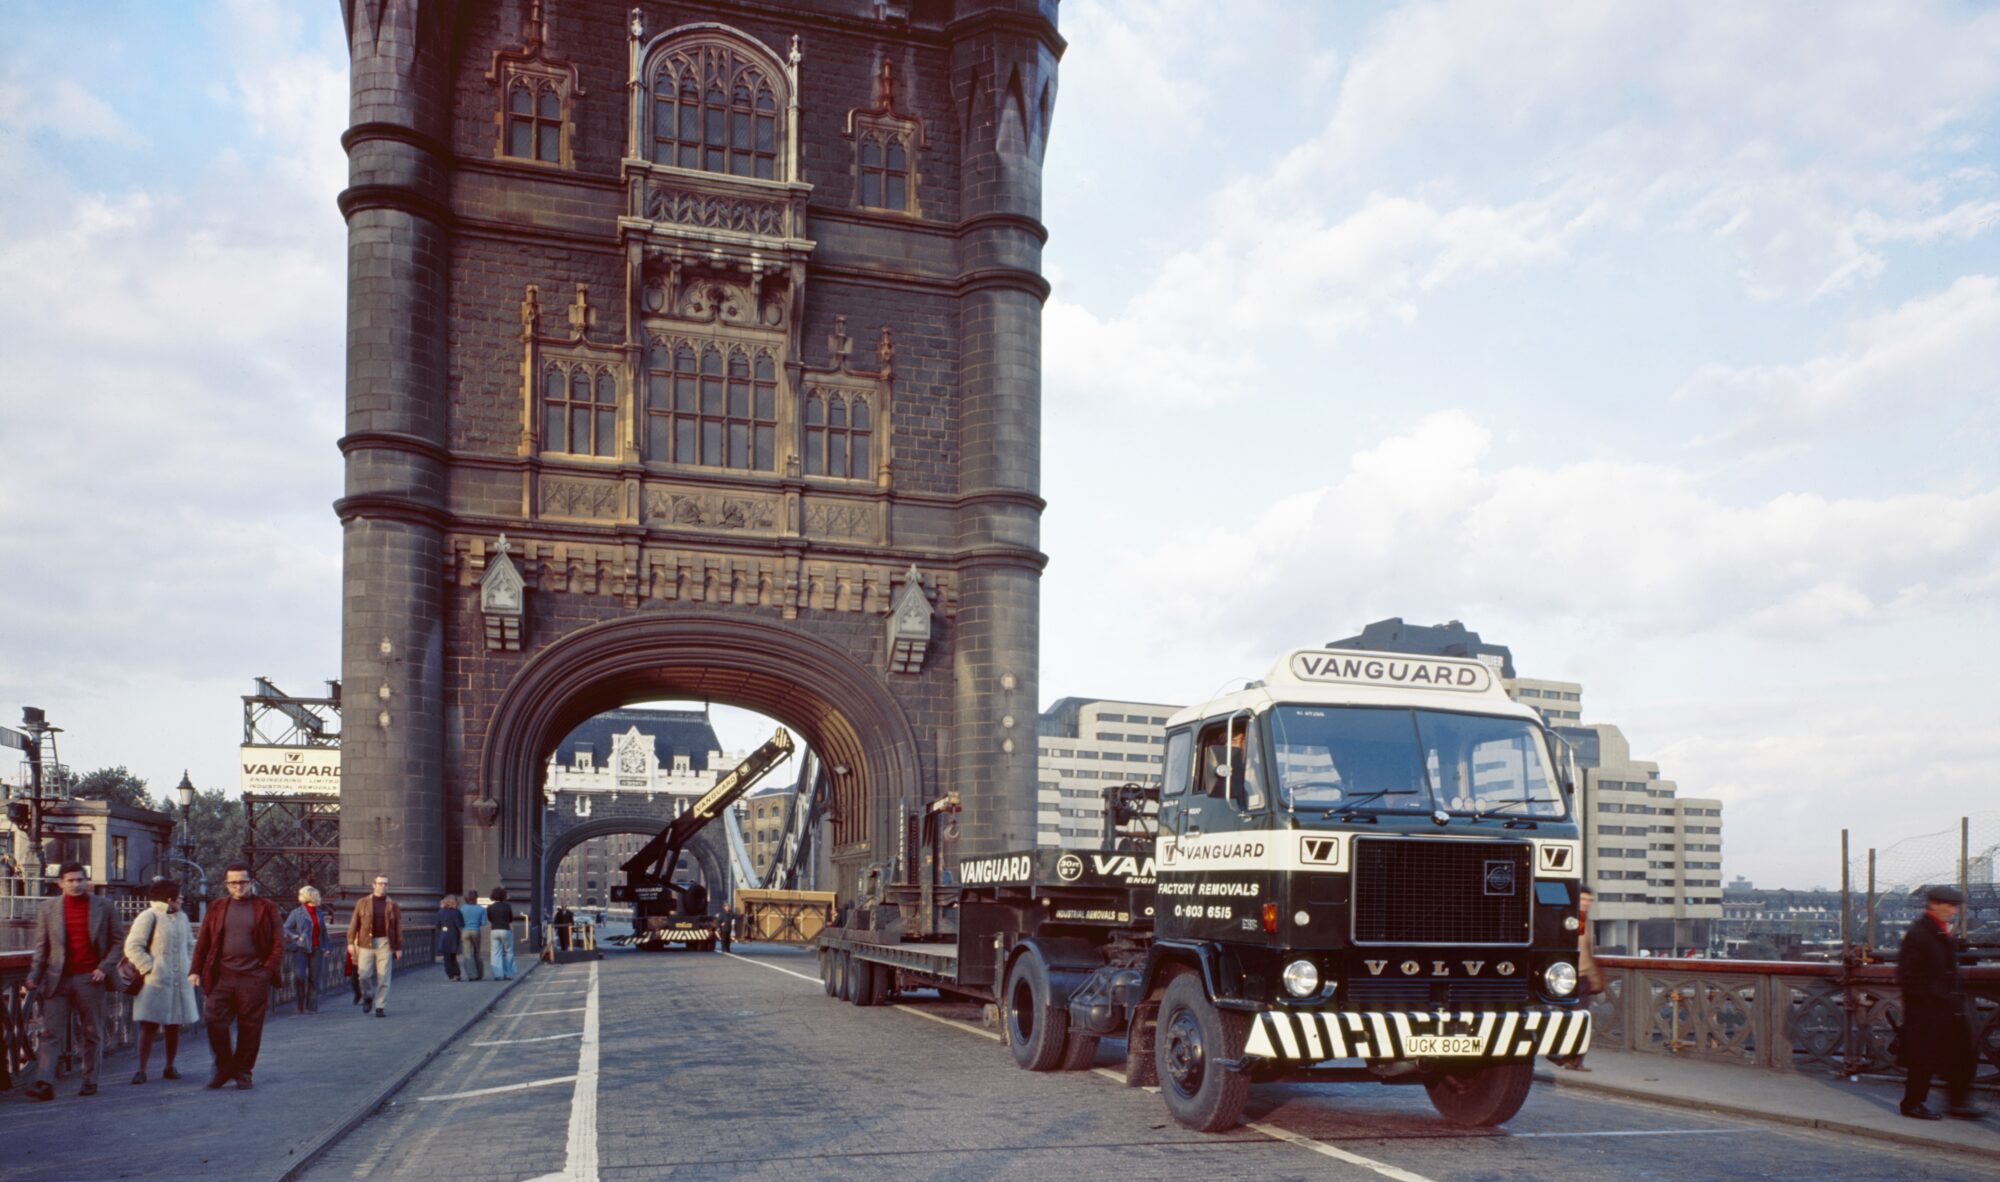 Vanguard lorry on Tower Bridge, 1975